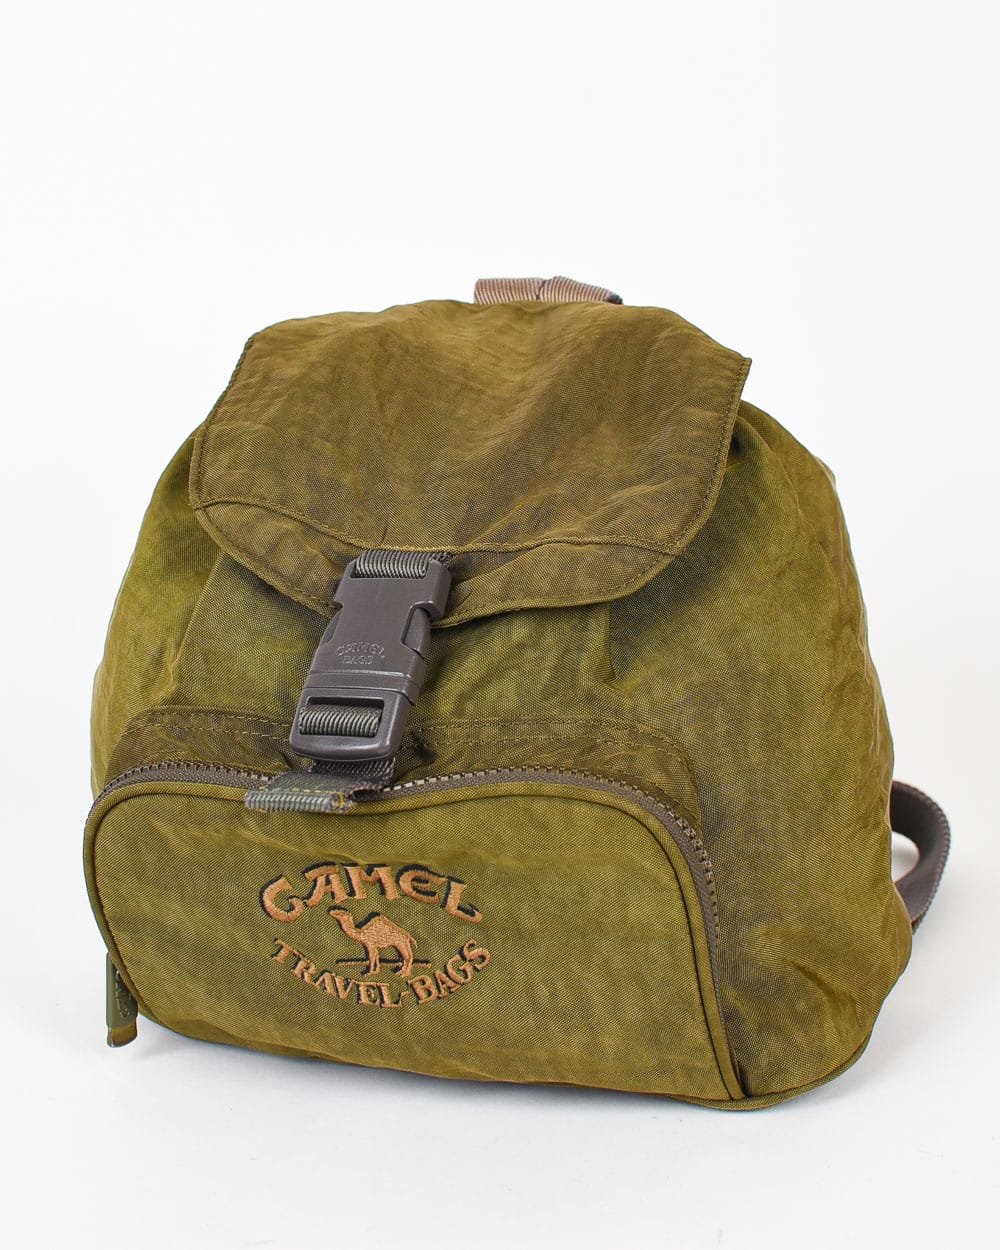  Camel Travel Bags Backpack